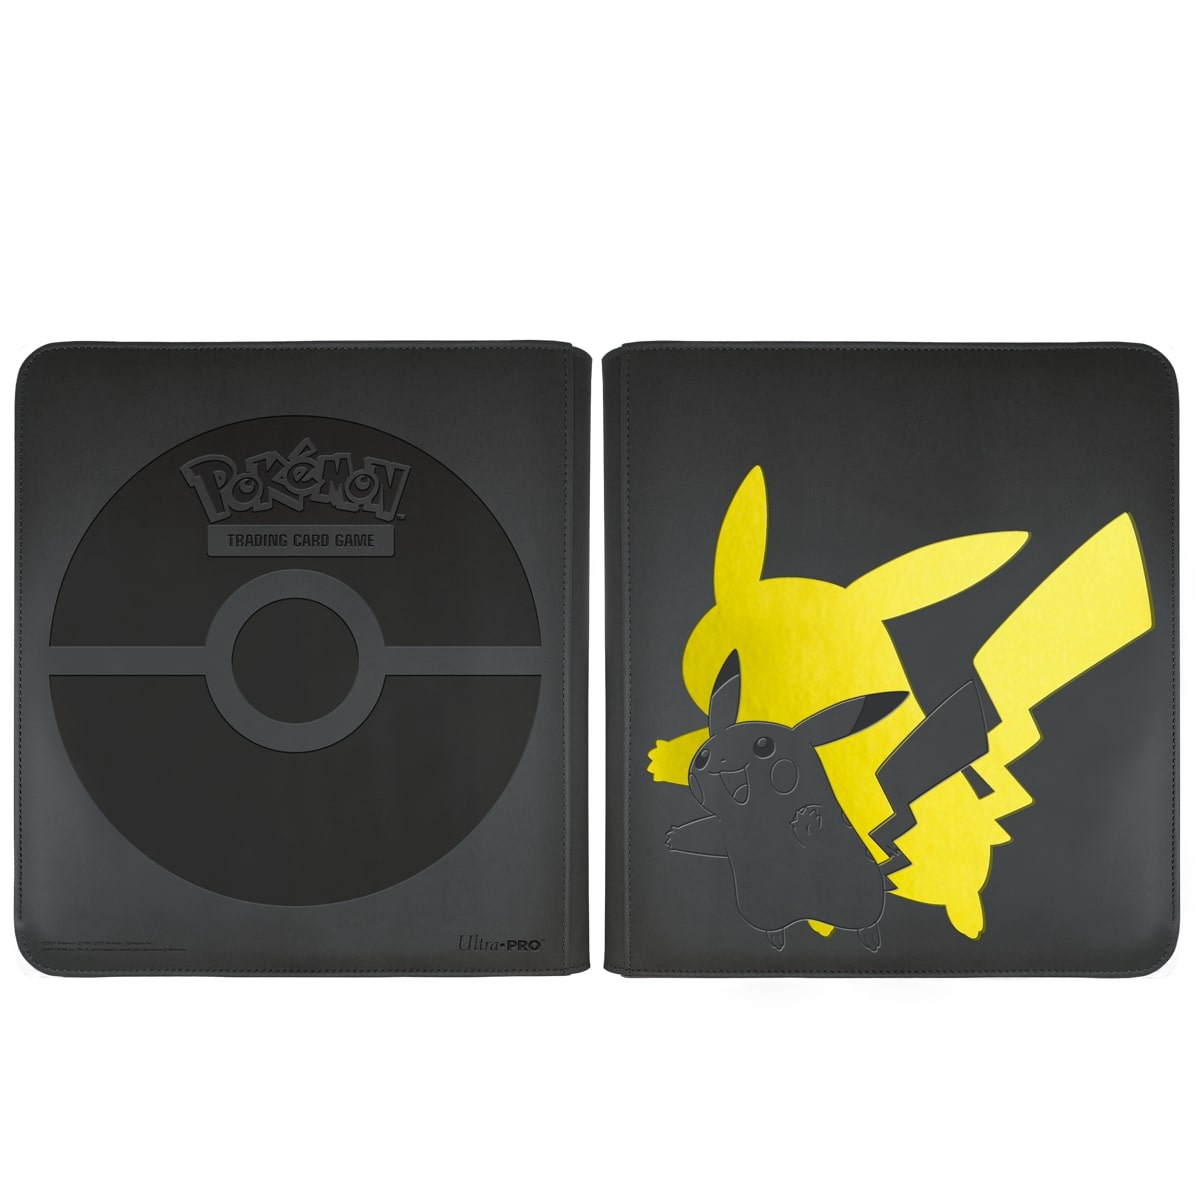 UP Zip Binder Pro 12PKT Pokémon Elite ser Pikachu